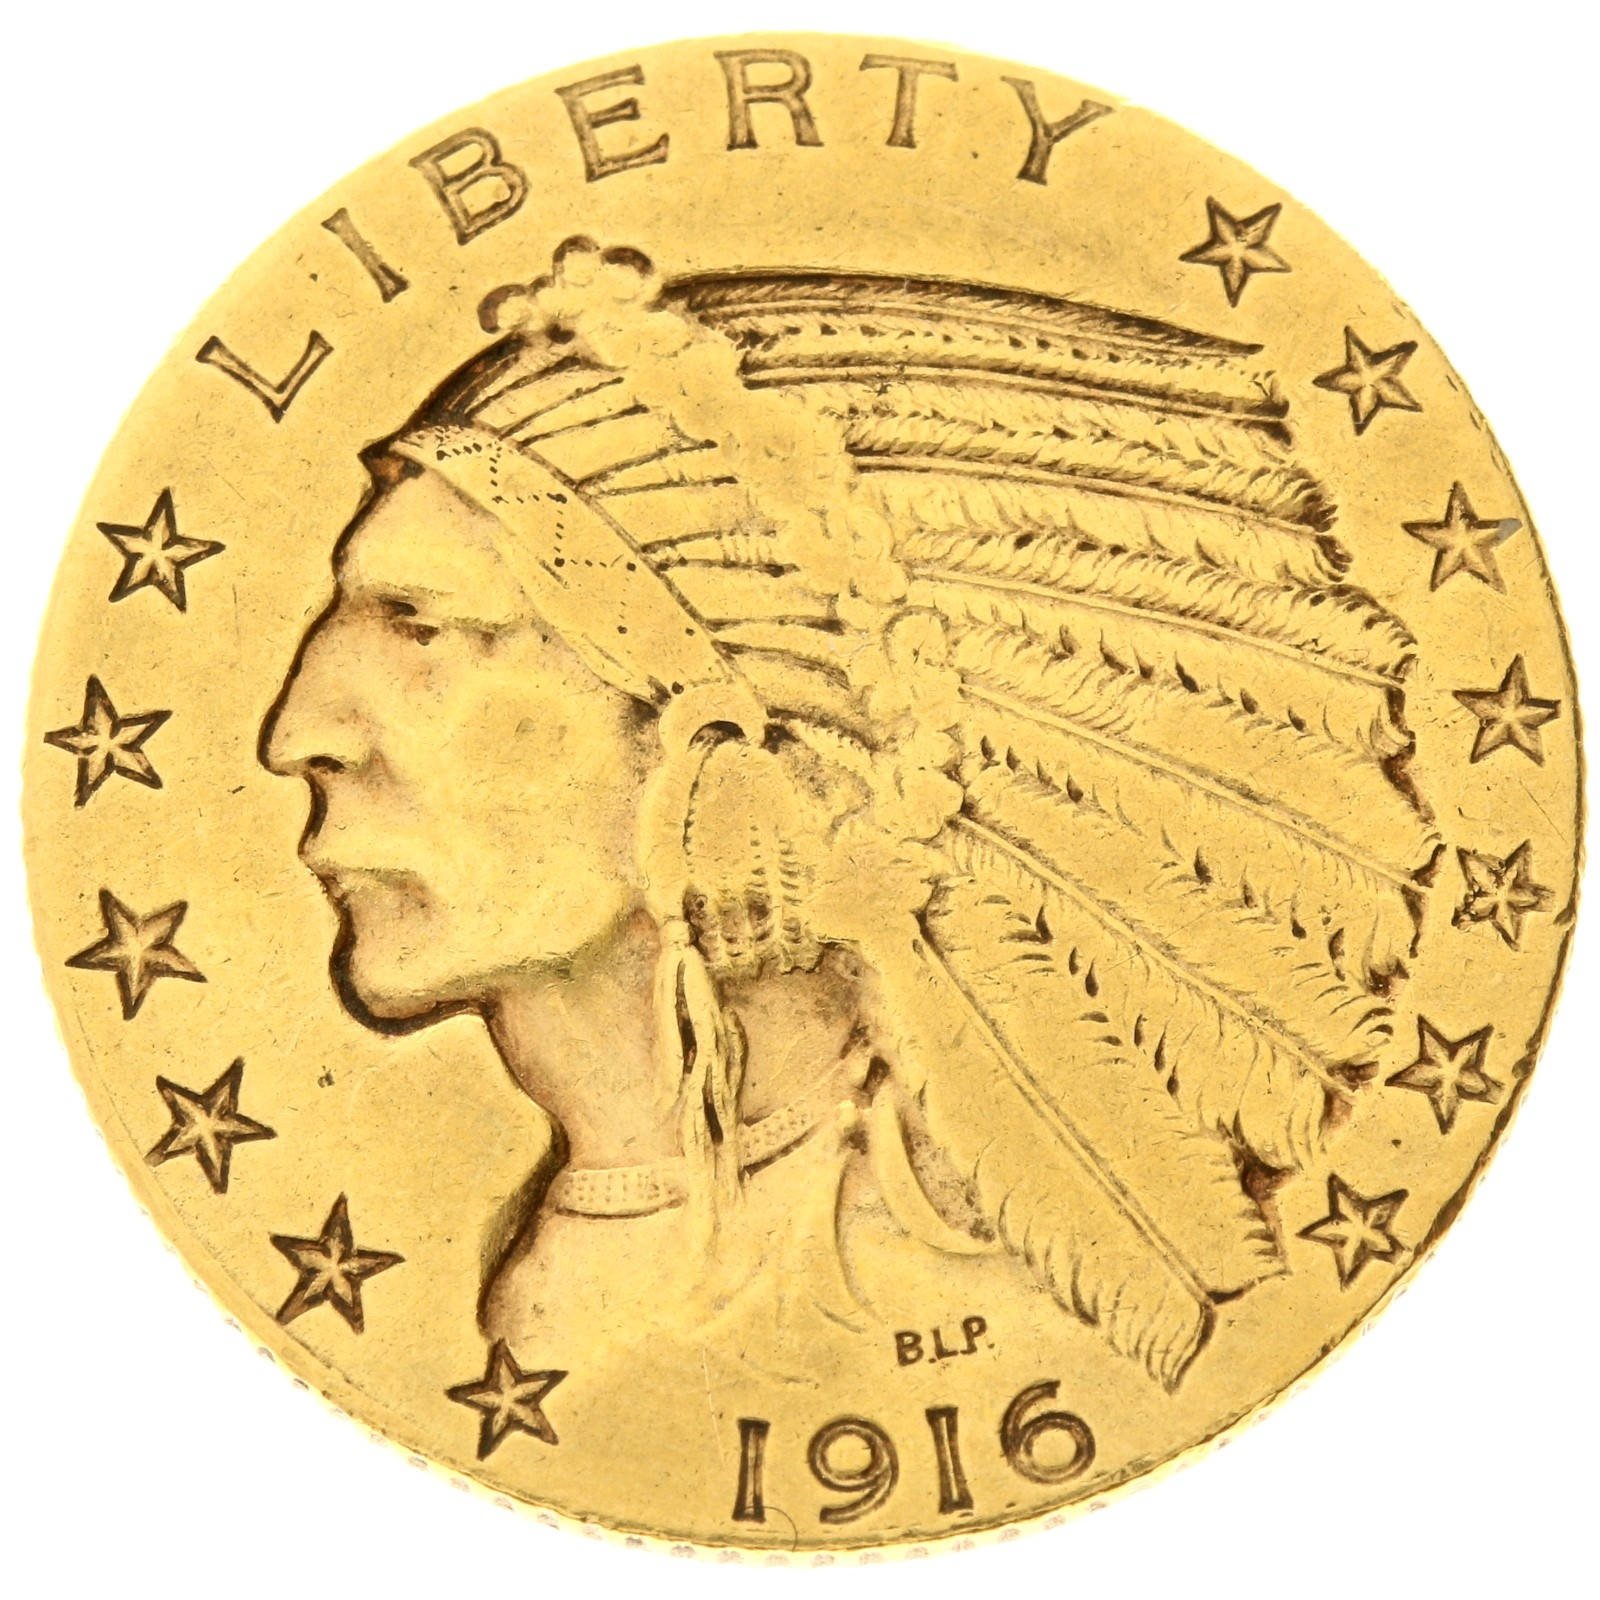 USA - 5 dollar - 1916 - S - Indian Head 